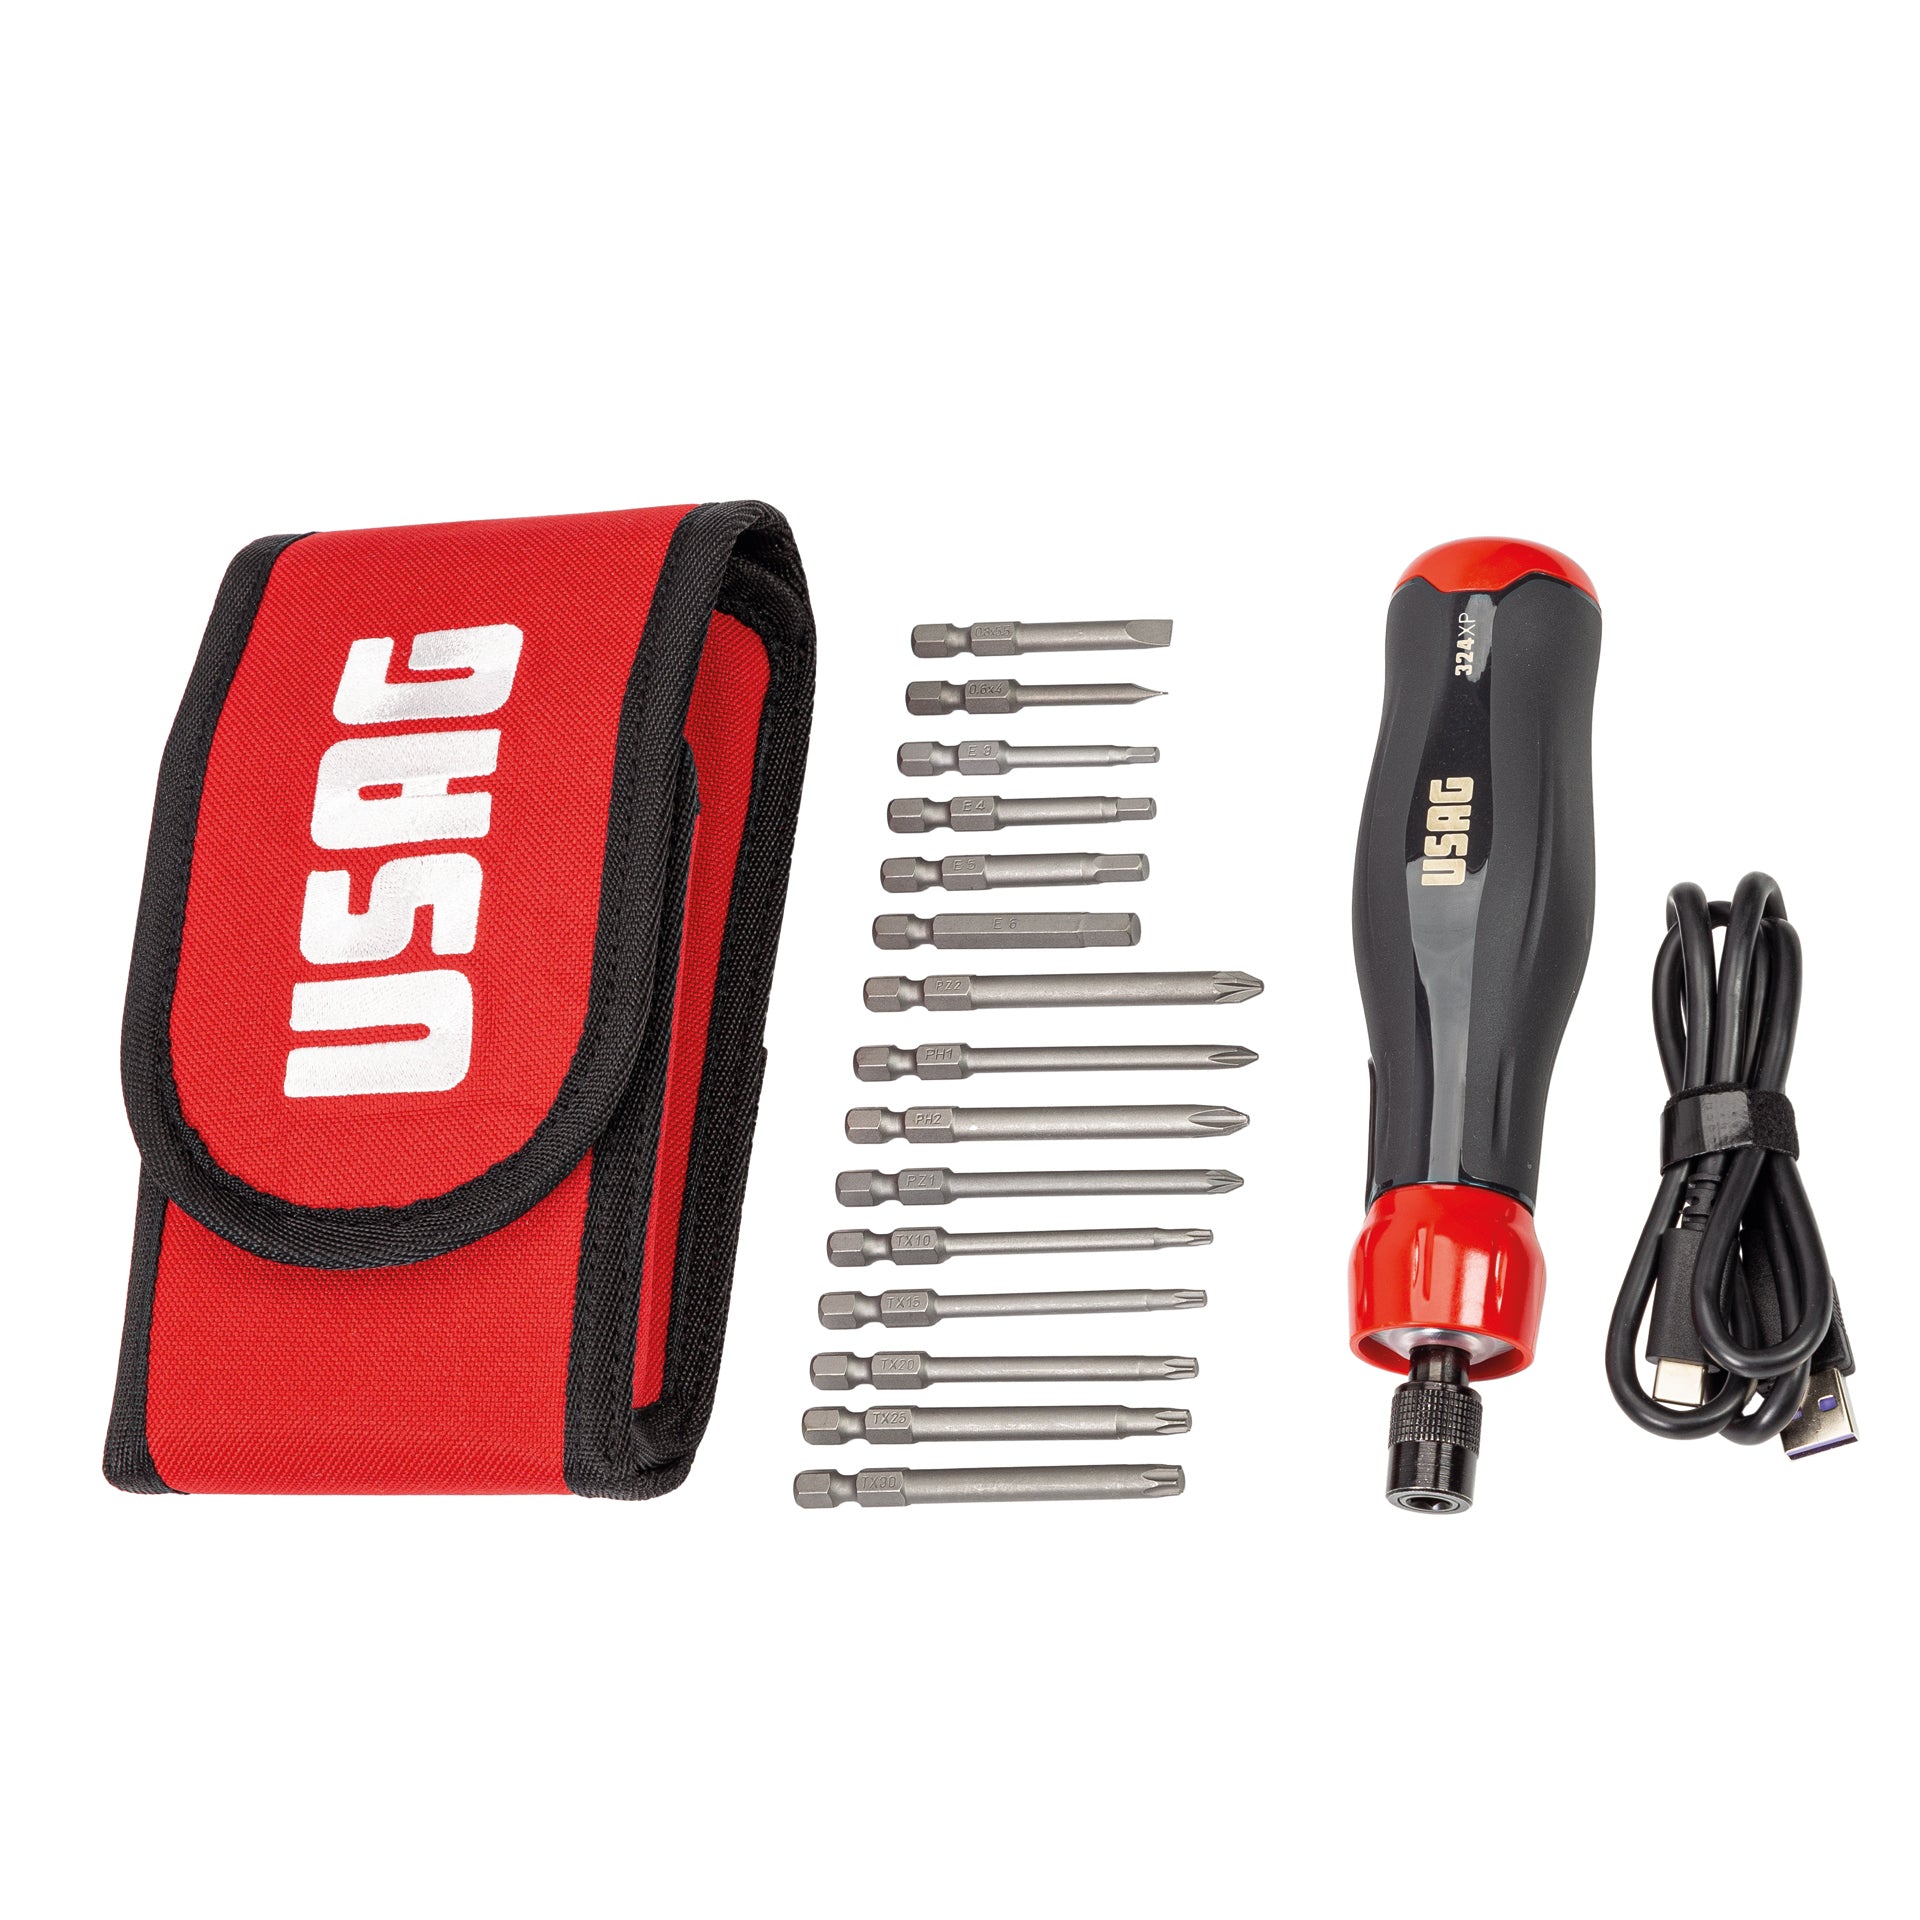 Bag with power assist screwdrivers and bits (16 PCS) - Usag 324 XP/B16